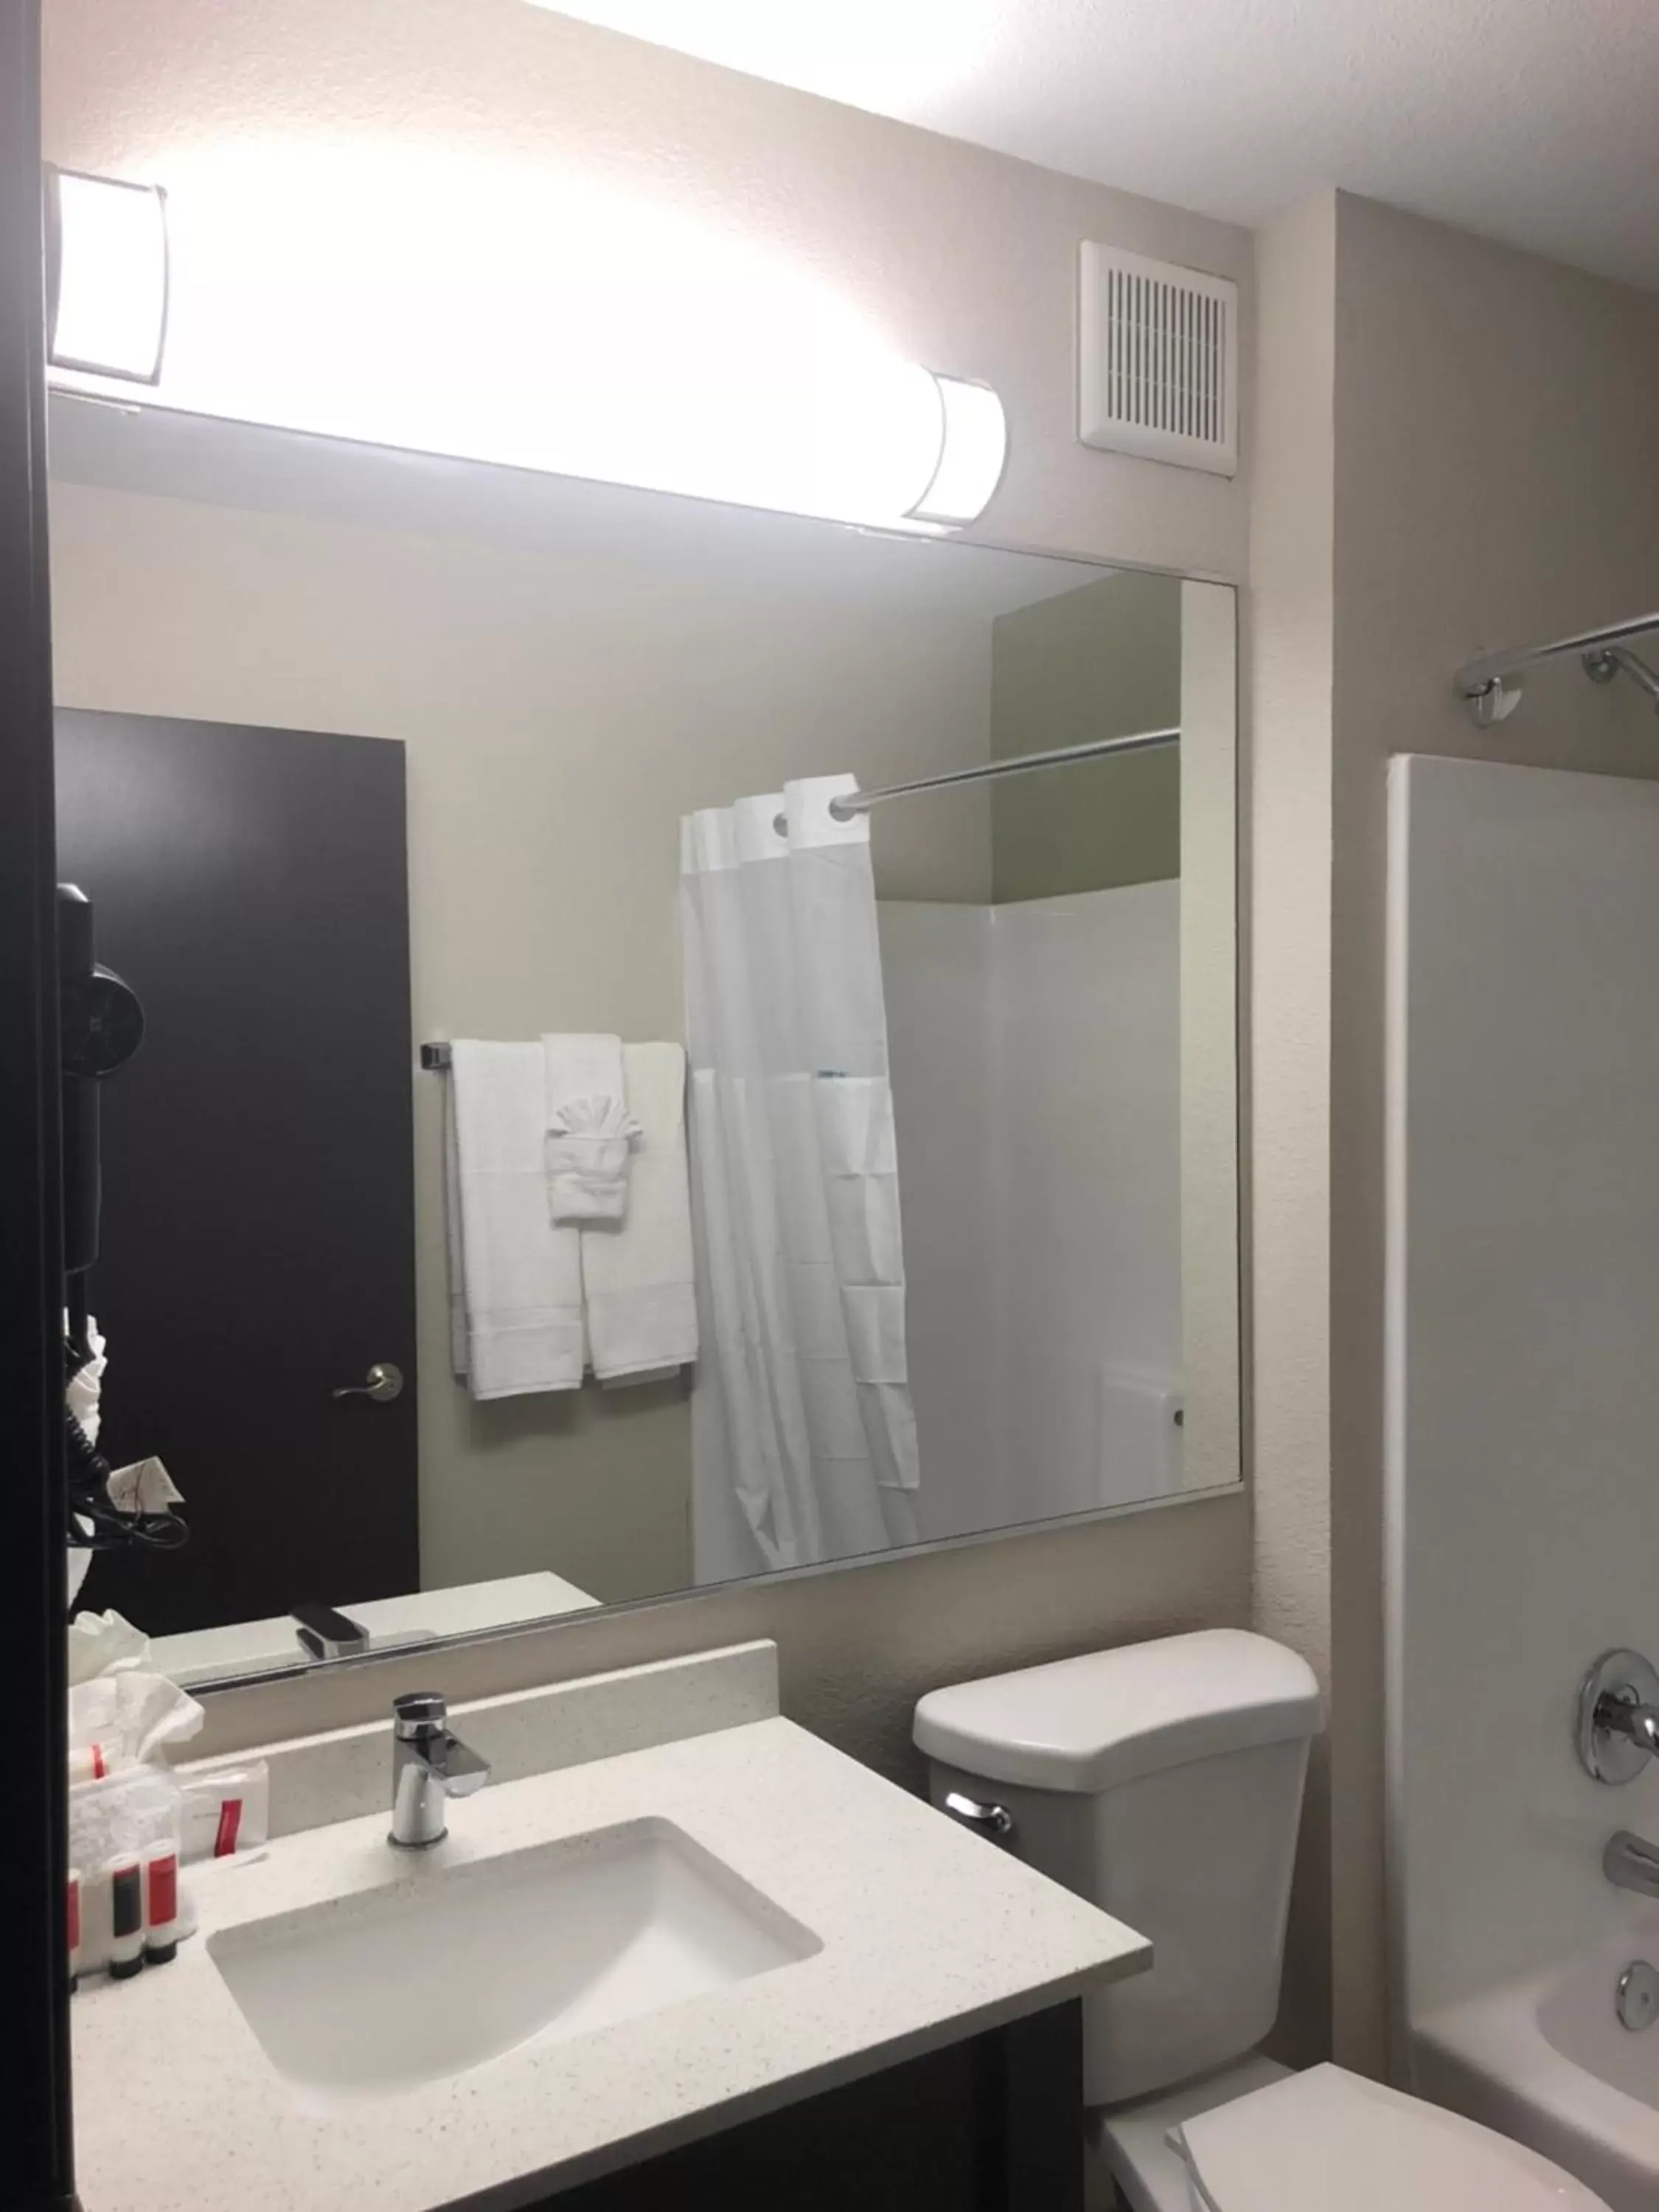 Bathroom in Baymont by Wyndham Phoenix I-10 near 51st Ave